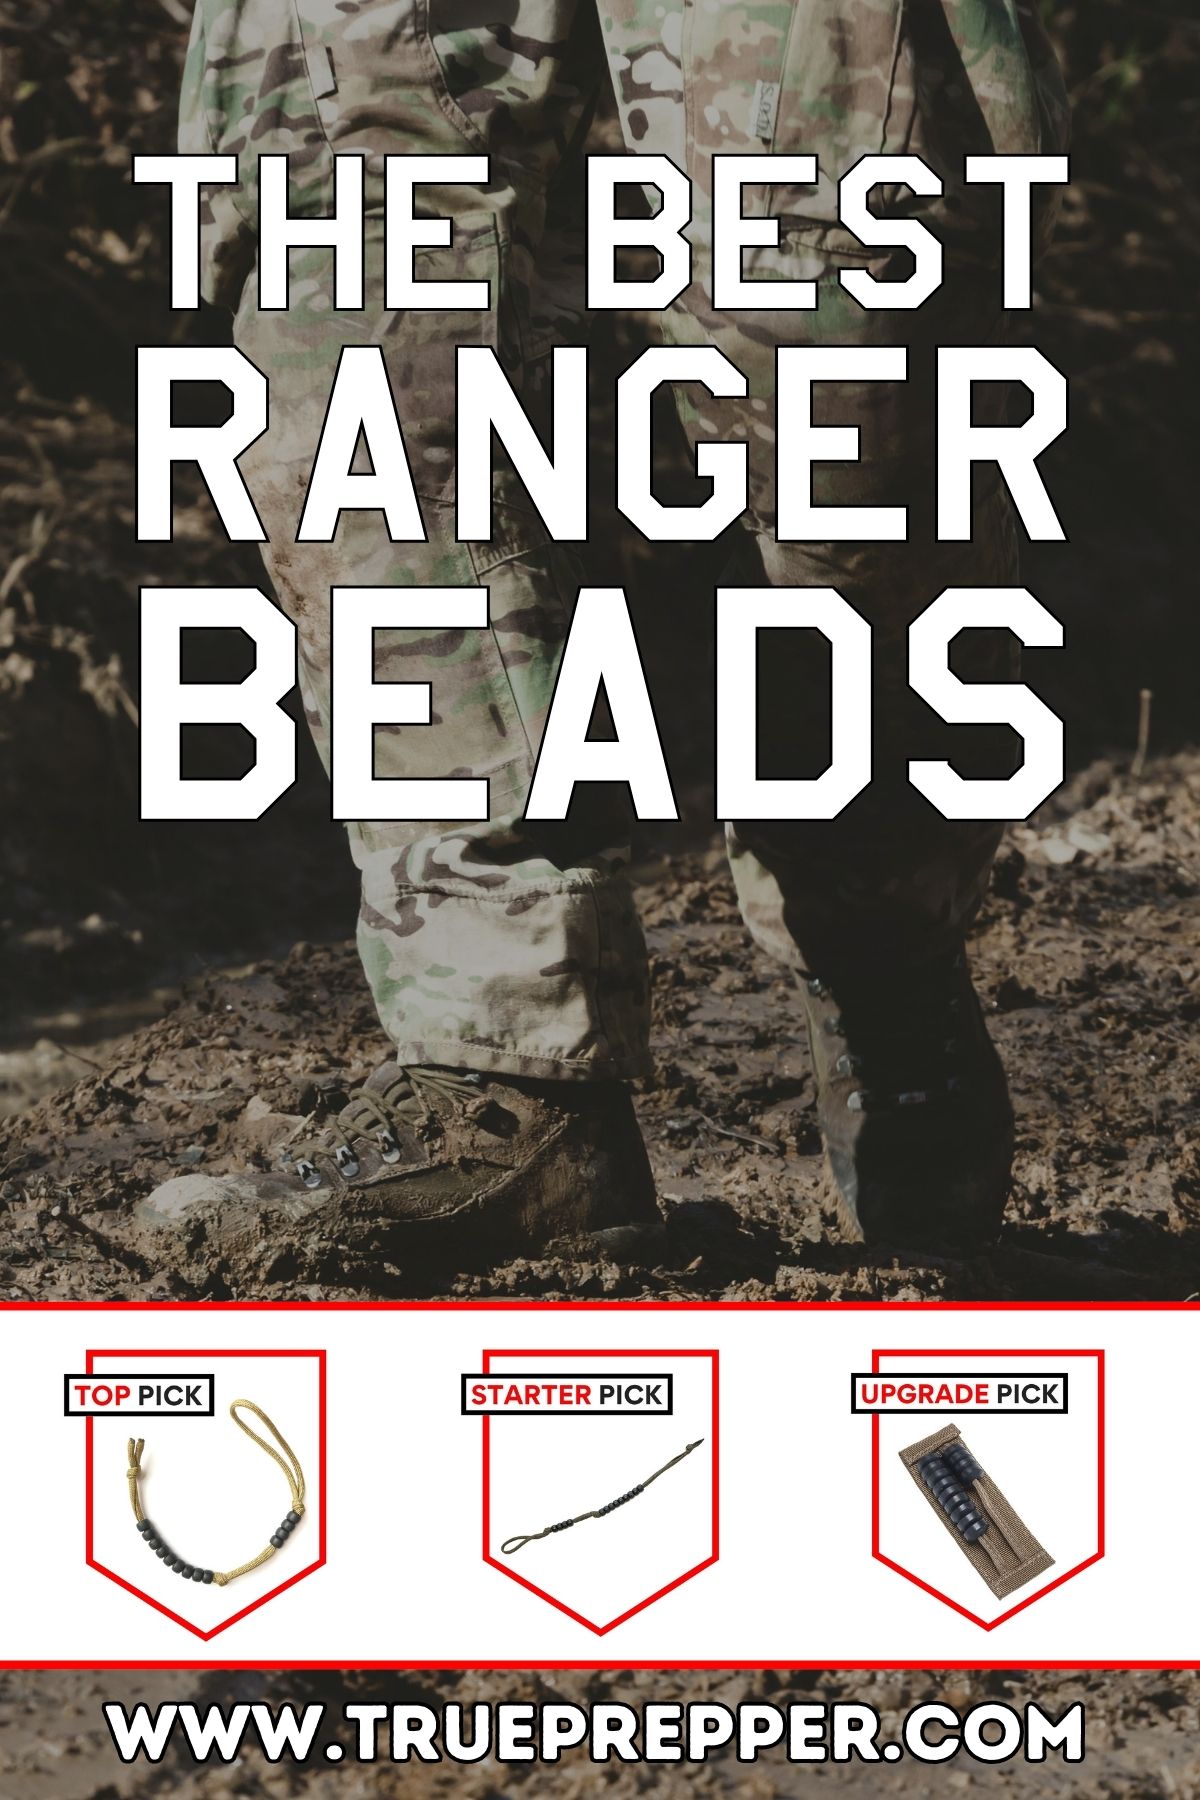 Pace Counter Beads, Ranger, GPS & Navigation